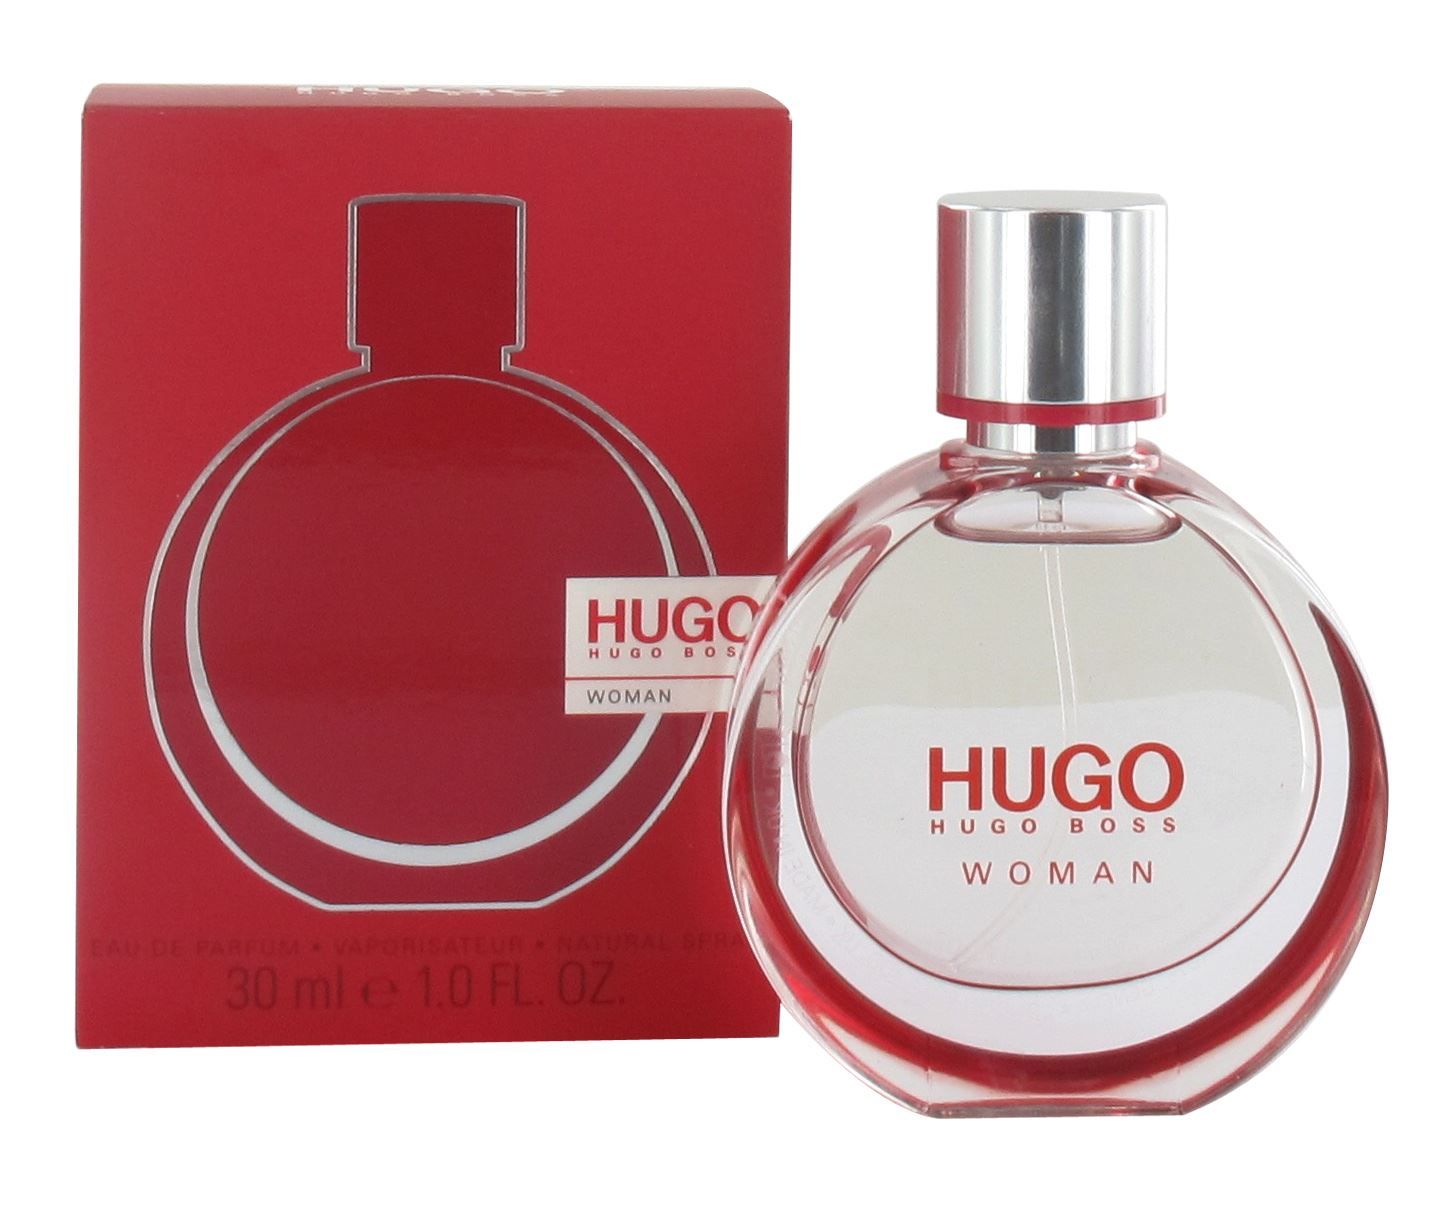 Hugo com. Hugo Boss woman Eau de Parfum. Hugo Boss woman 30 мл. Hugo Boss Hugo woman Eau de Parfum. Парфюмерная вода Hugo Boss Hugo woman, 30 мл.